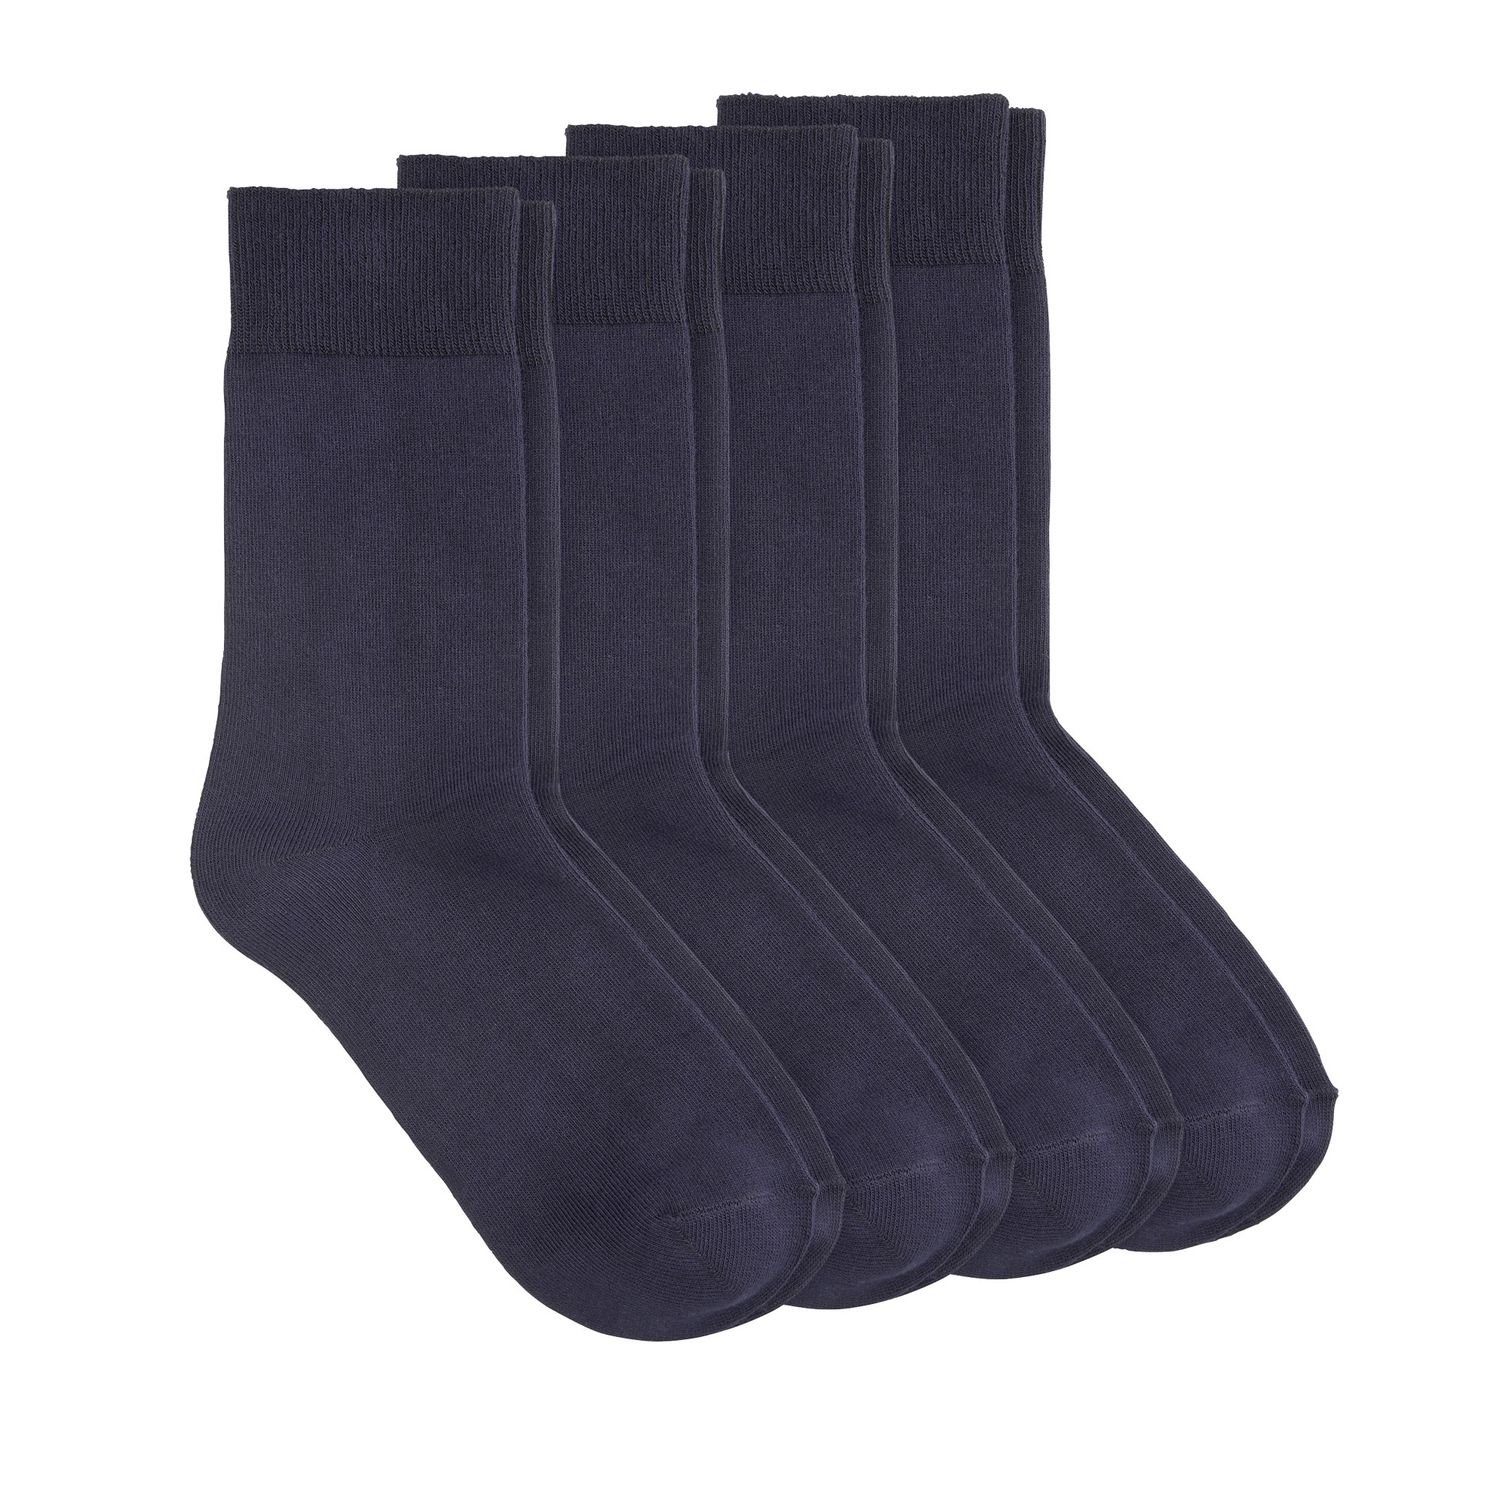 MUSTANG Socken Unisex Basic Socks (24-Paar) mit geripptem rutschfesten Komfortbund, 24 Paar navy